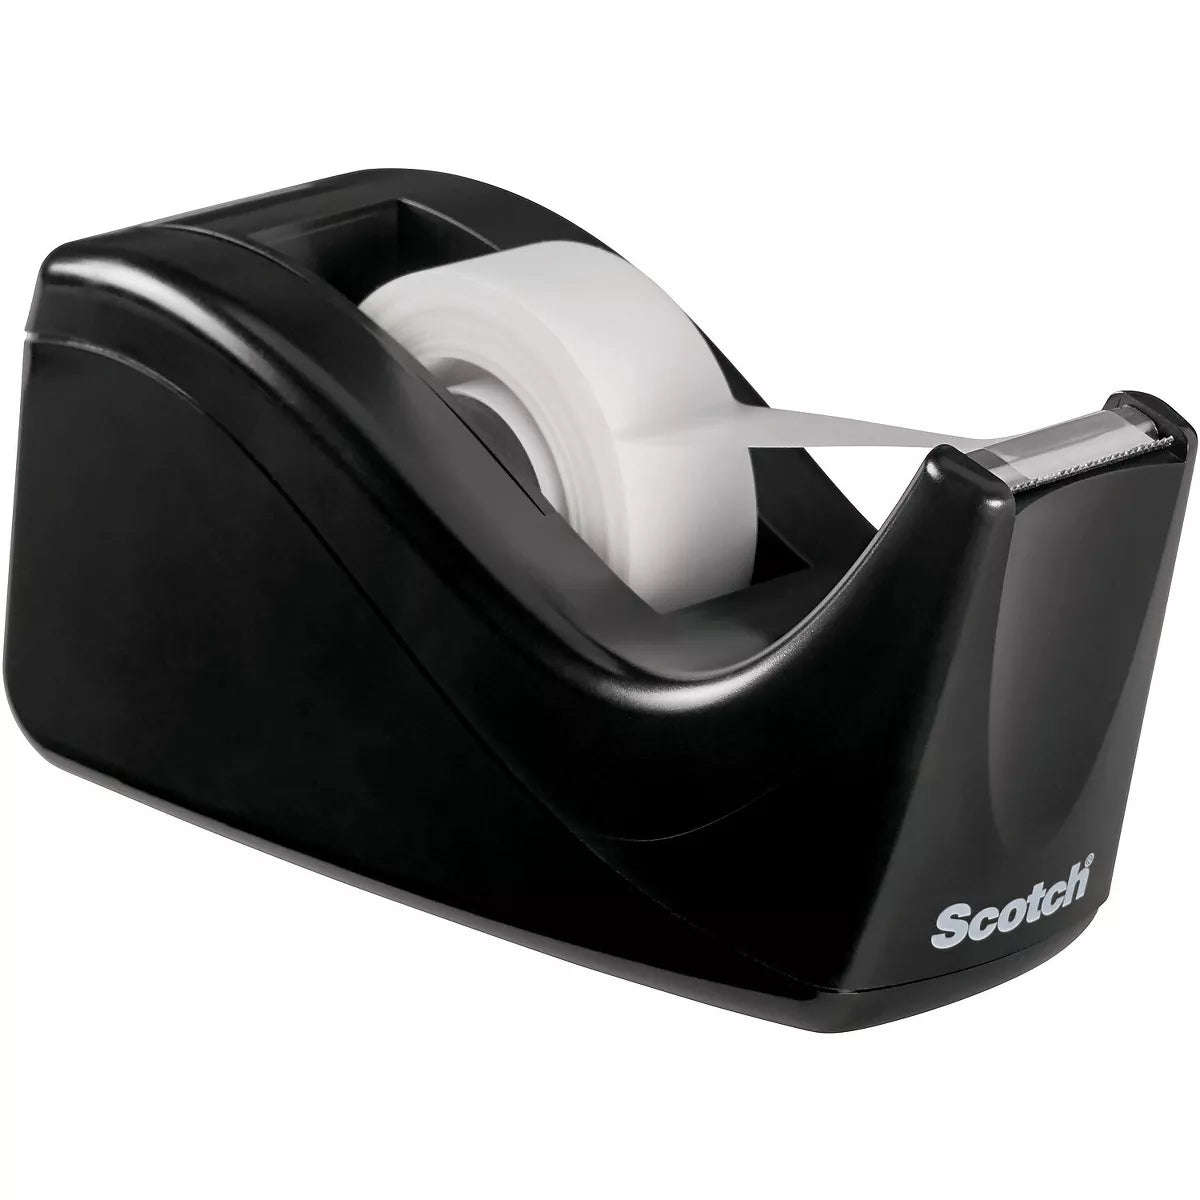 Scotch Desktop Tape Dispenser Black Two-Tone (C60-BK) 567884